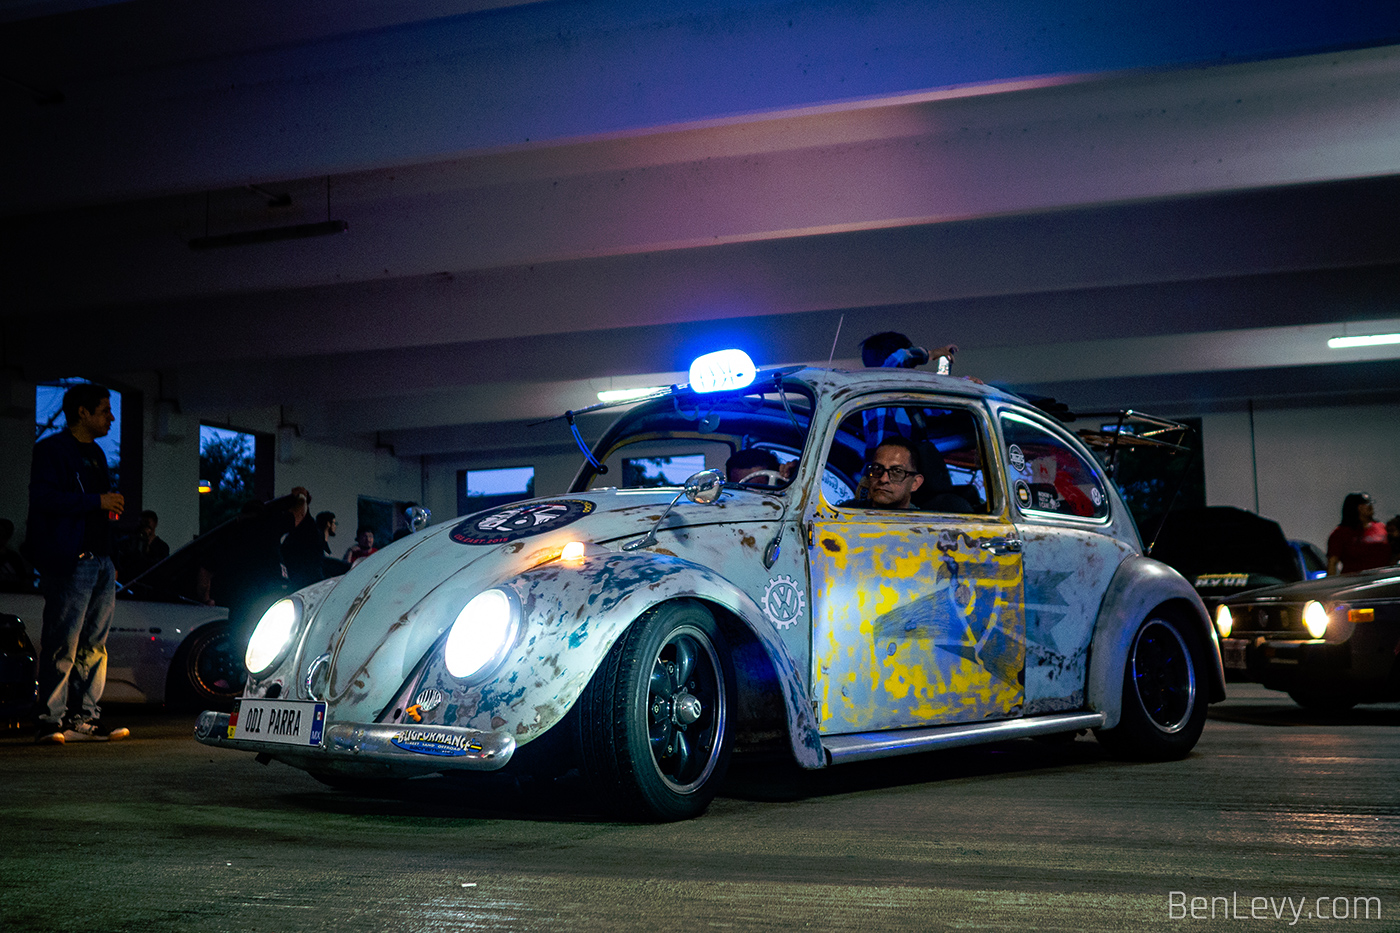 Mexico-themed Volkswagen Beetle